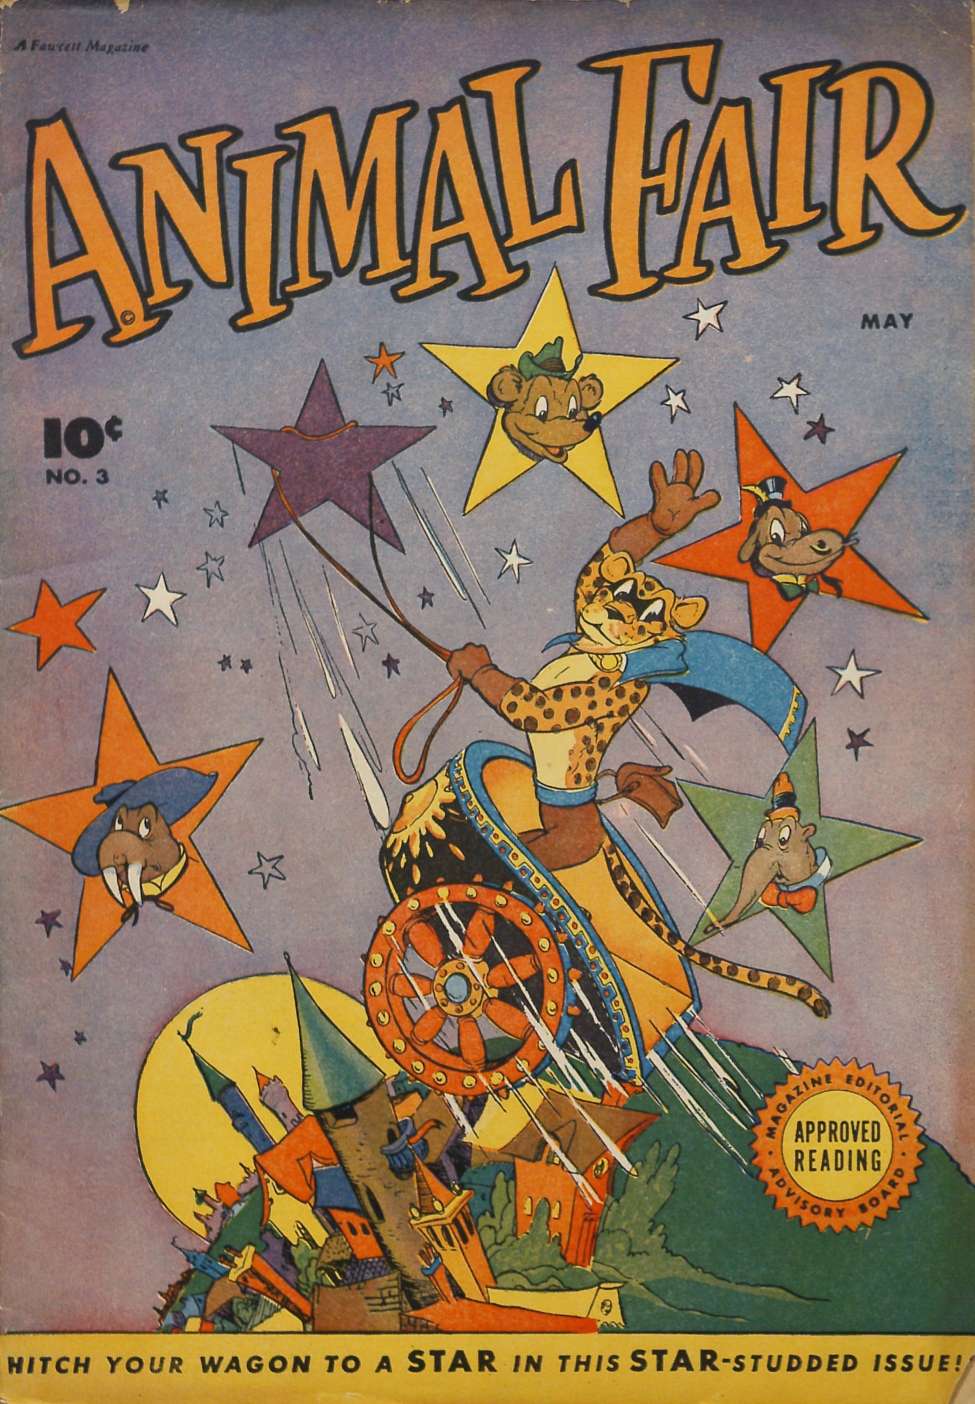 Book Cover For Animal Fair 3